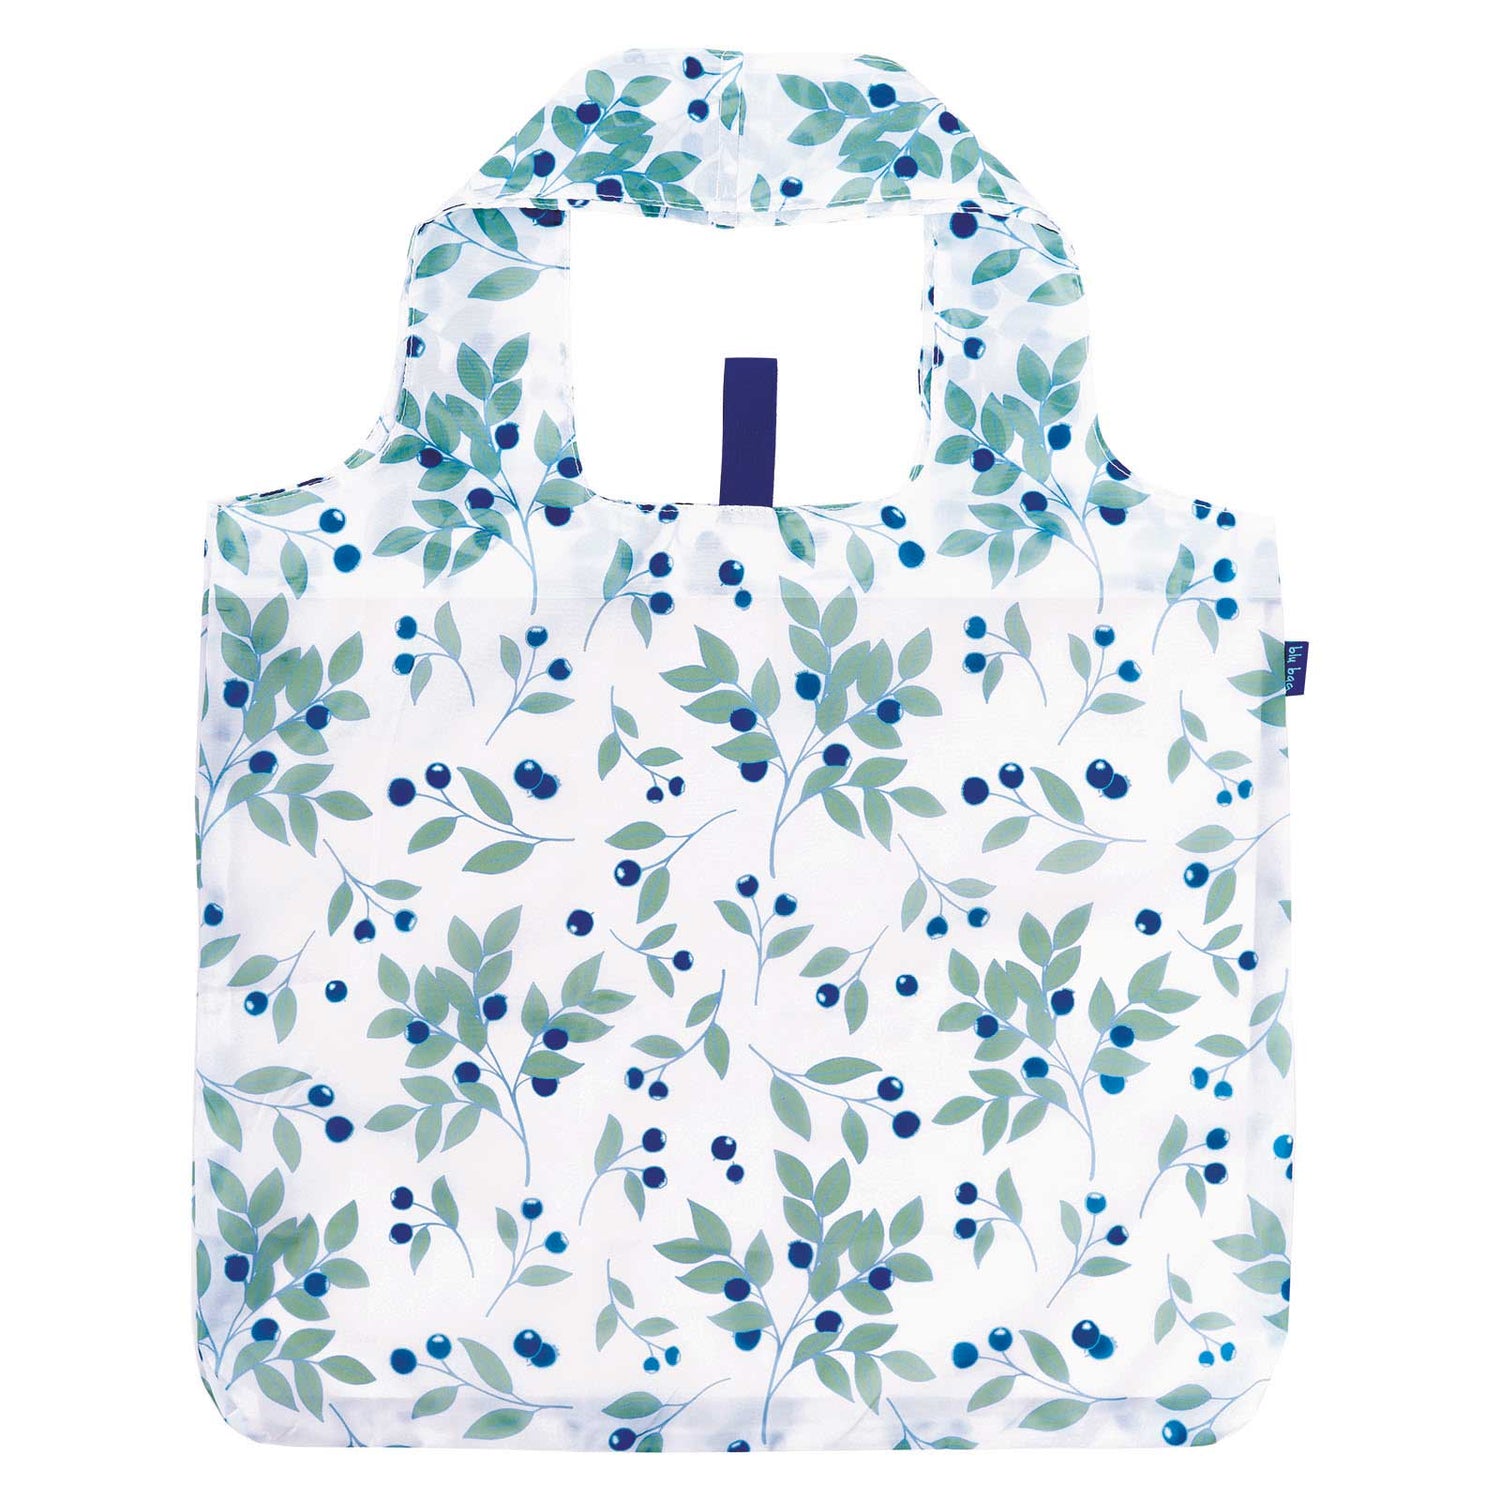 Blueberries Reusable Blu Shopping Bag - Machine washable Reusable Shopping Bag - rockflowerpaper